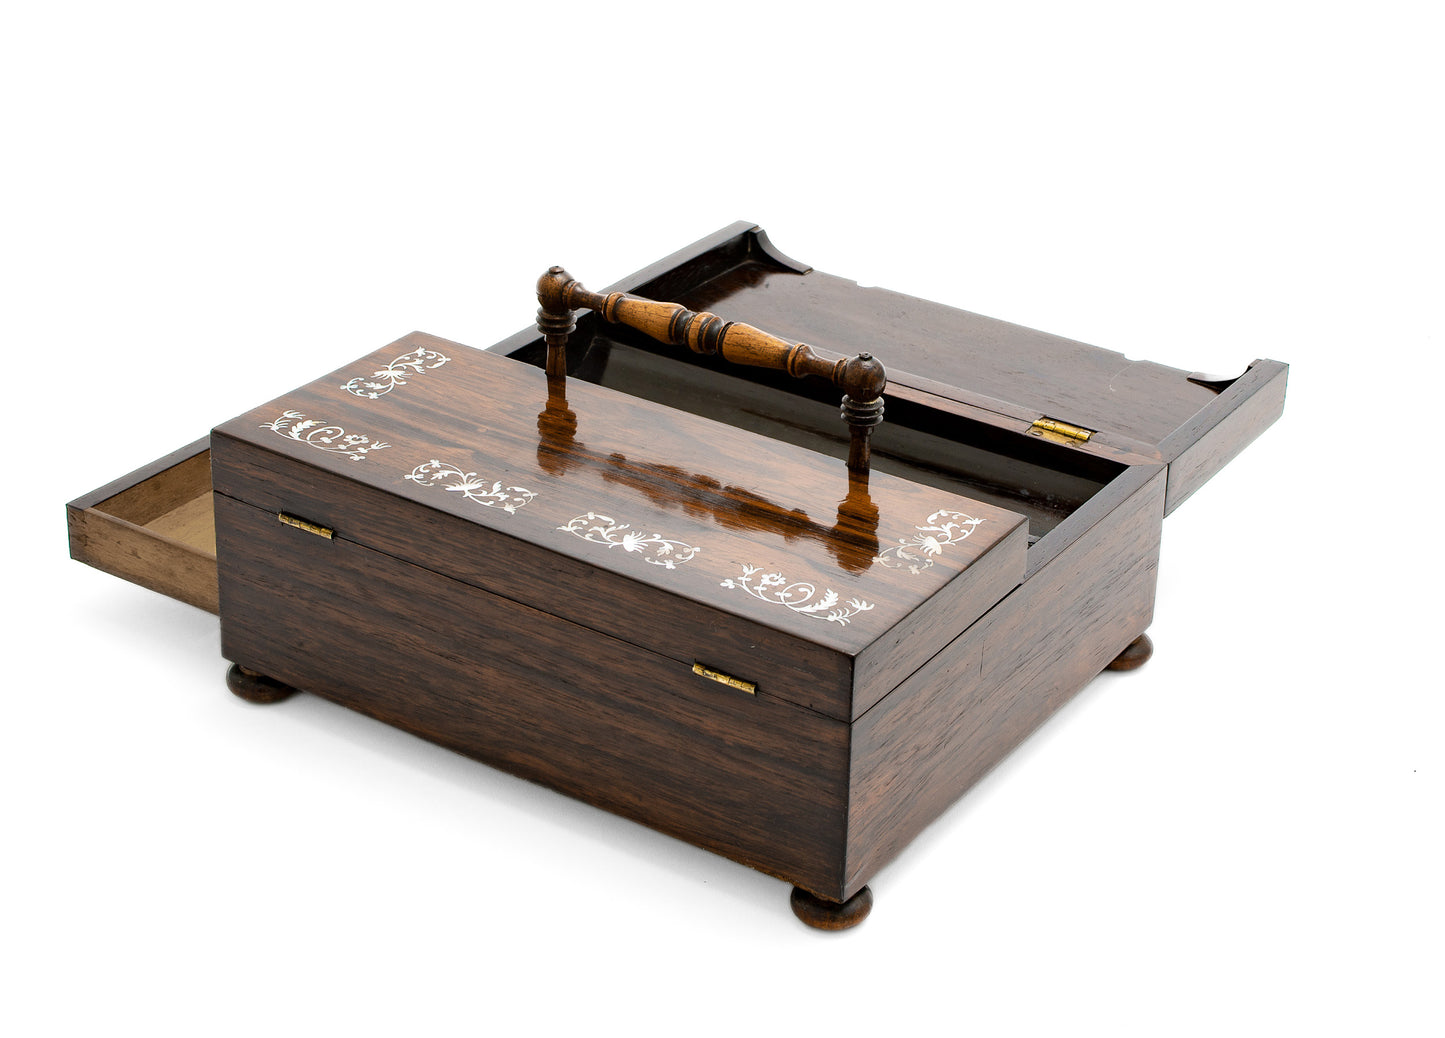 Antique Georgian Regency / William IV Rosewood Portable Writing Box / Inkstand (Code 2150)